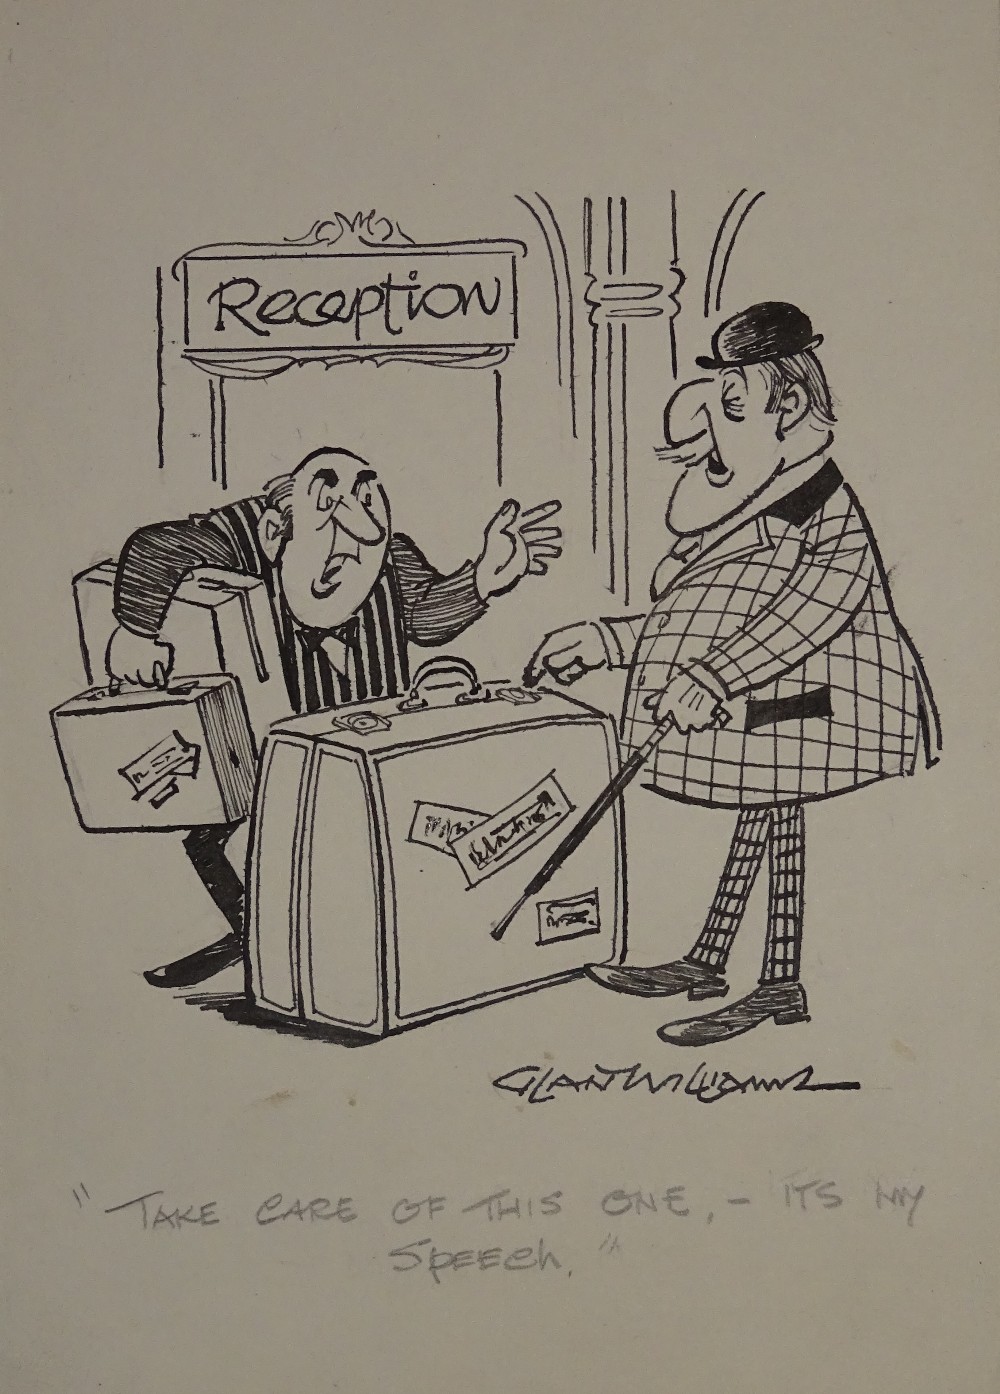 Williams, Glan, cartoonist (1911 - 1986), original cartoon, c1970, TAKE CARE OF THIS ONE,